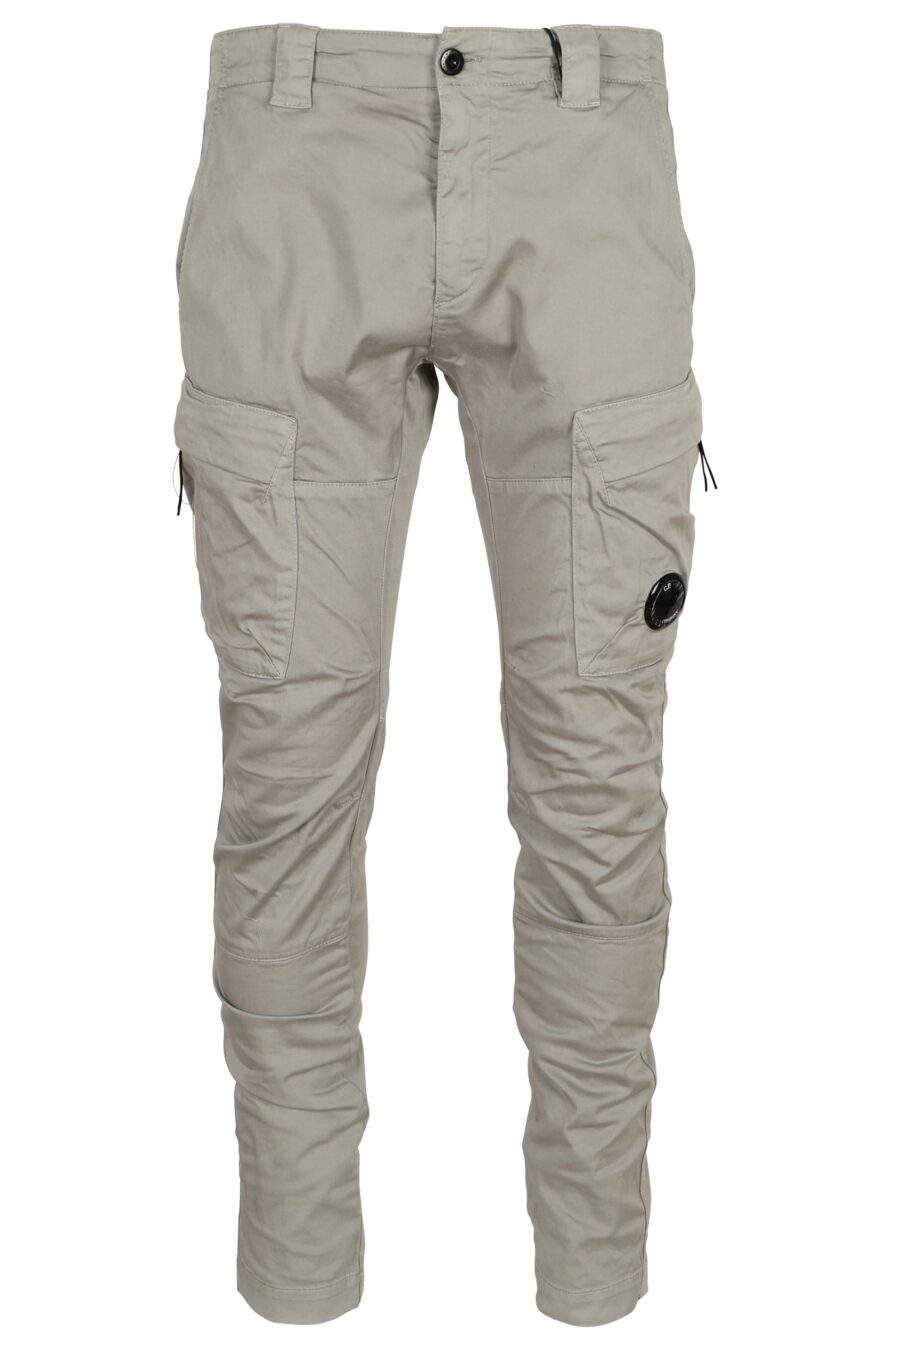 Pantalon cargo gris avec lentille logo - 7620943722895